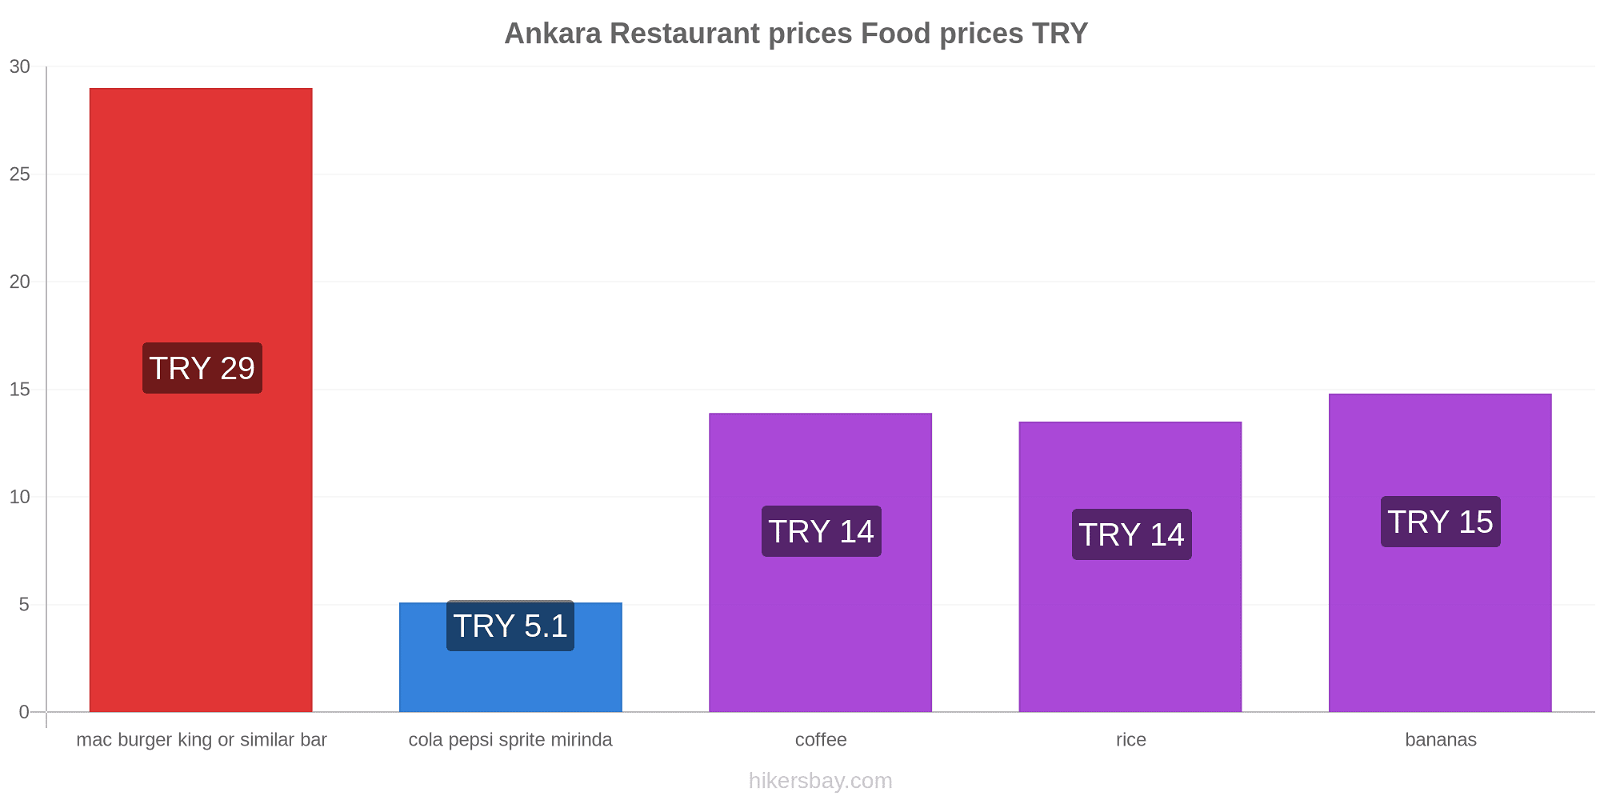 Ankara price changes hikersbay.com